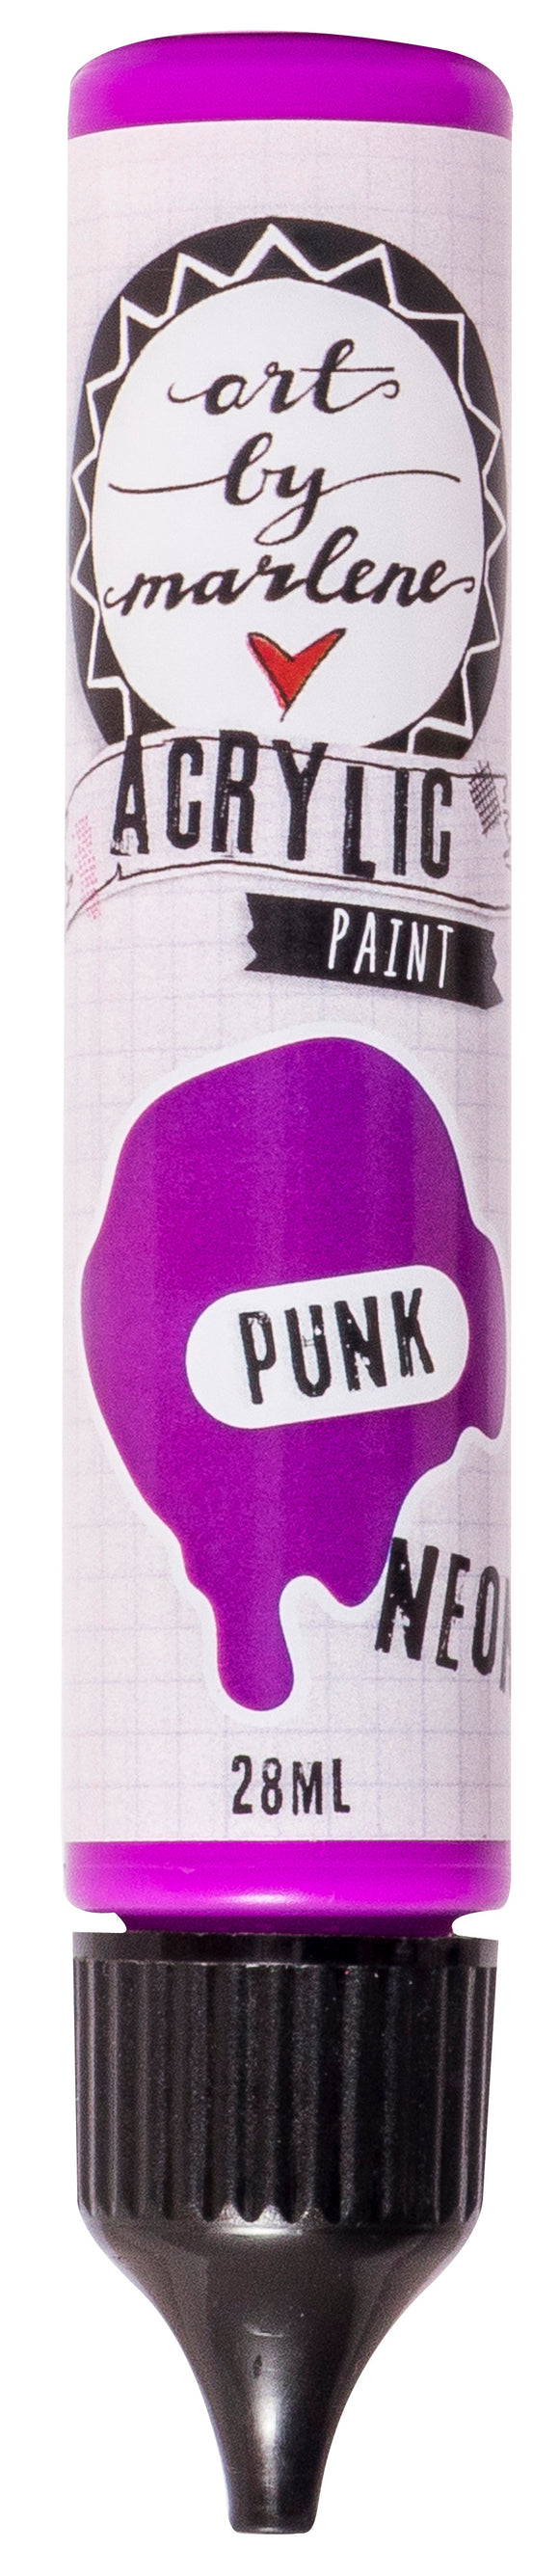 Acrylic Paint - Punk Neon : (ABM) ACP23